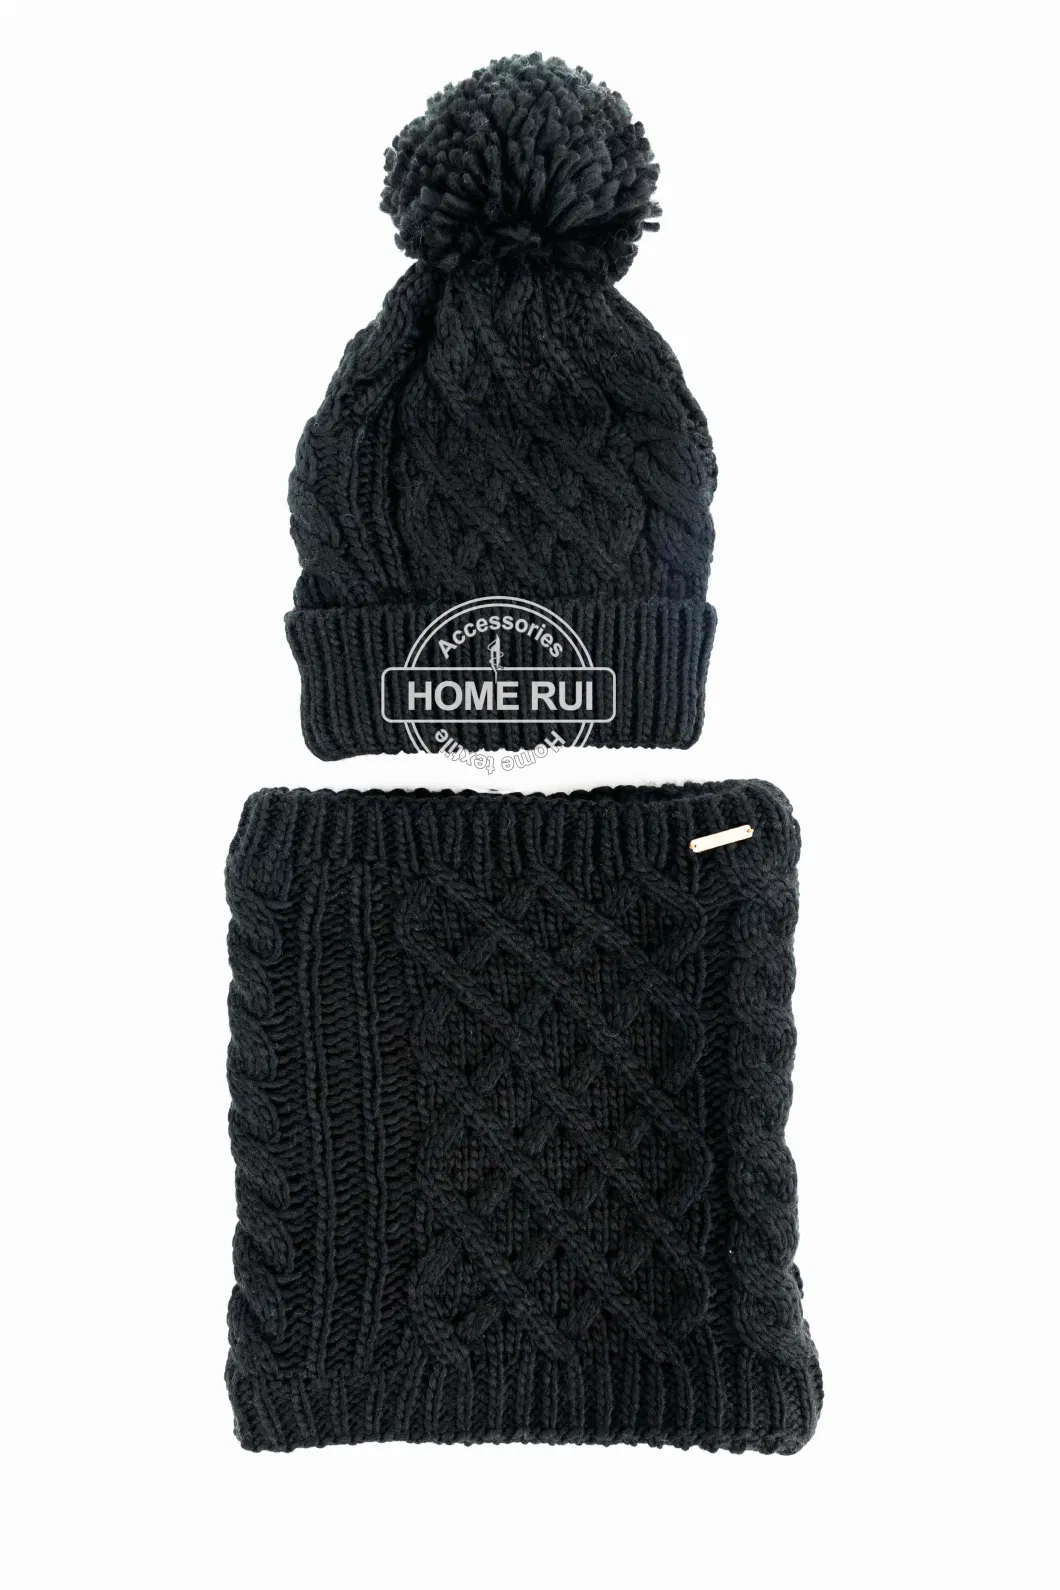 Unisex Women Men Beanie Scarf Winter Sets Cross Knit Cable Design POM Hats Caps Neck Warmer Fleece Two Layers Snood Hat Bonnet